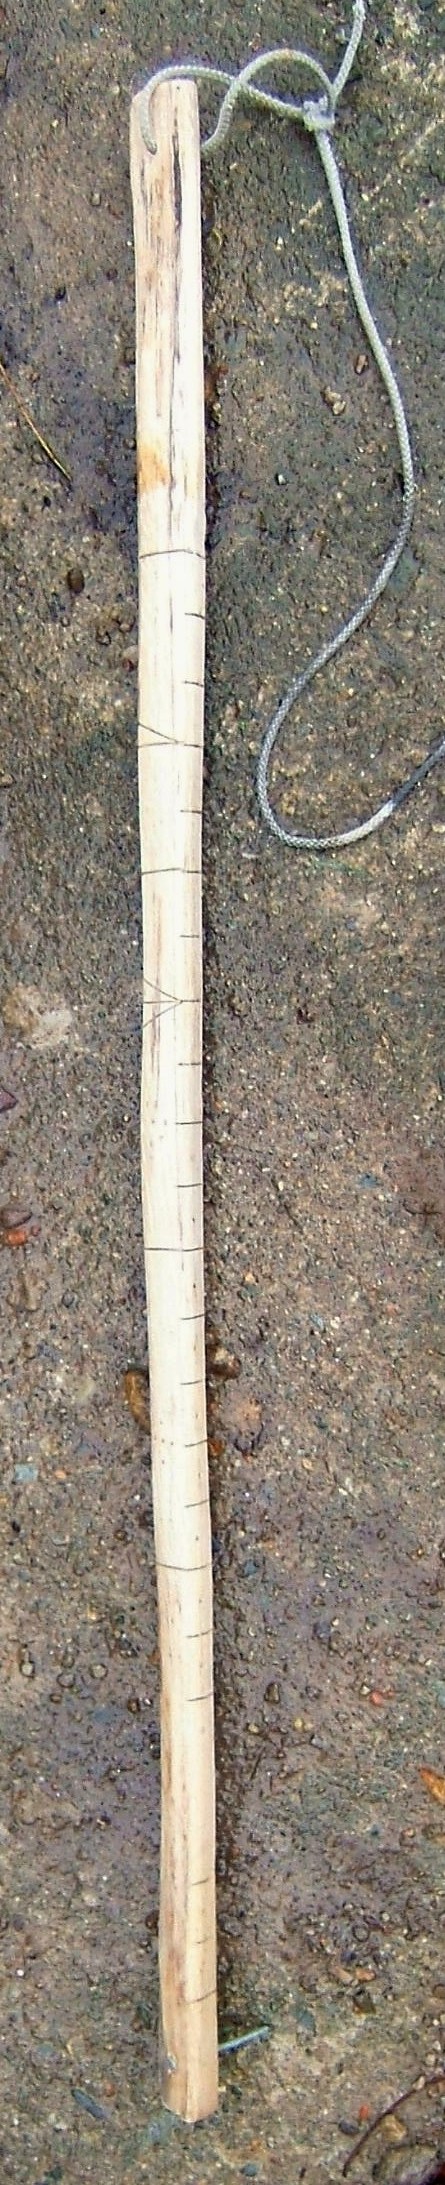 David Ellis's Collyweston stick